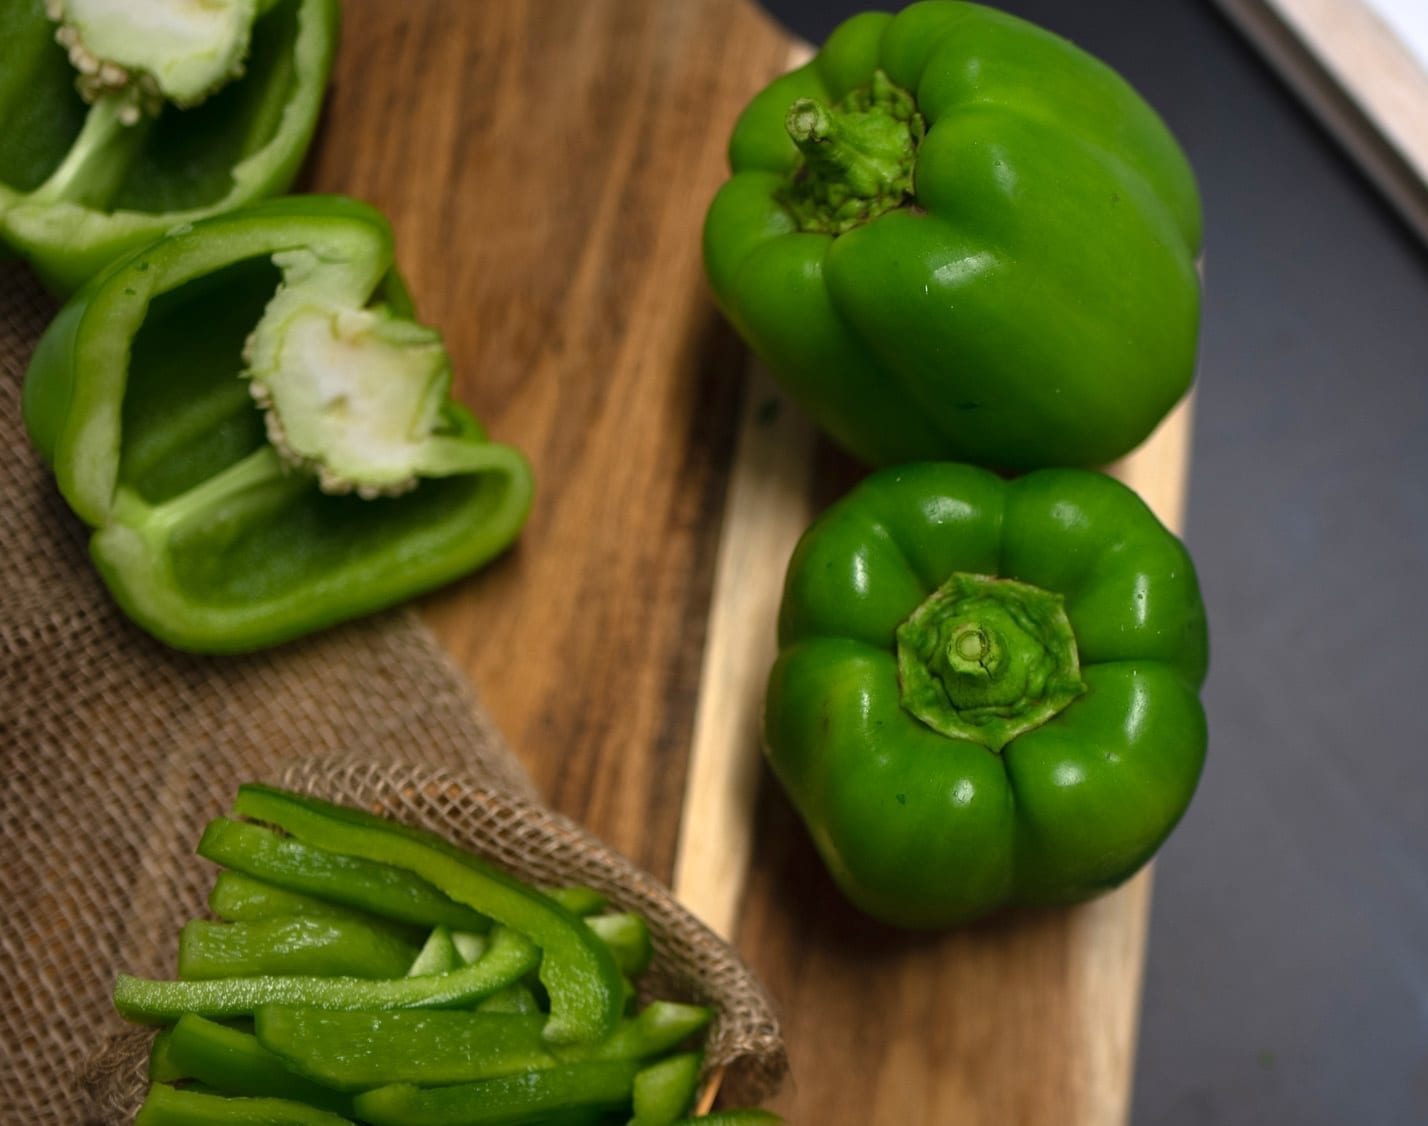 Green pepper wholesaler